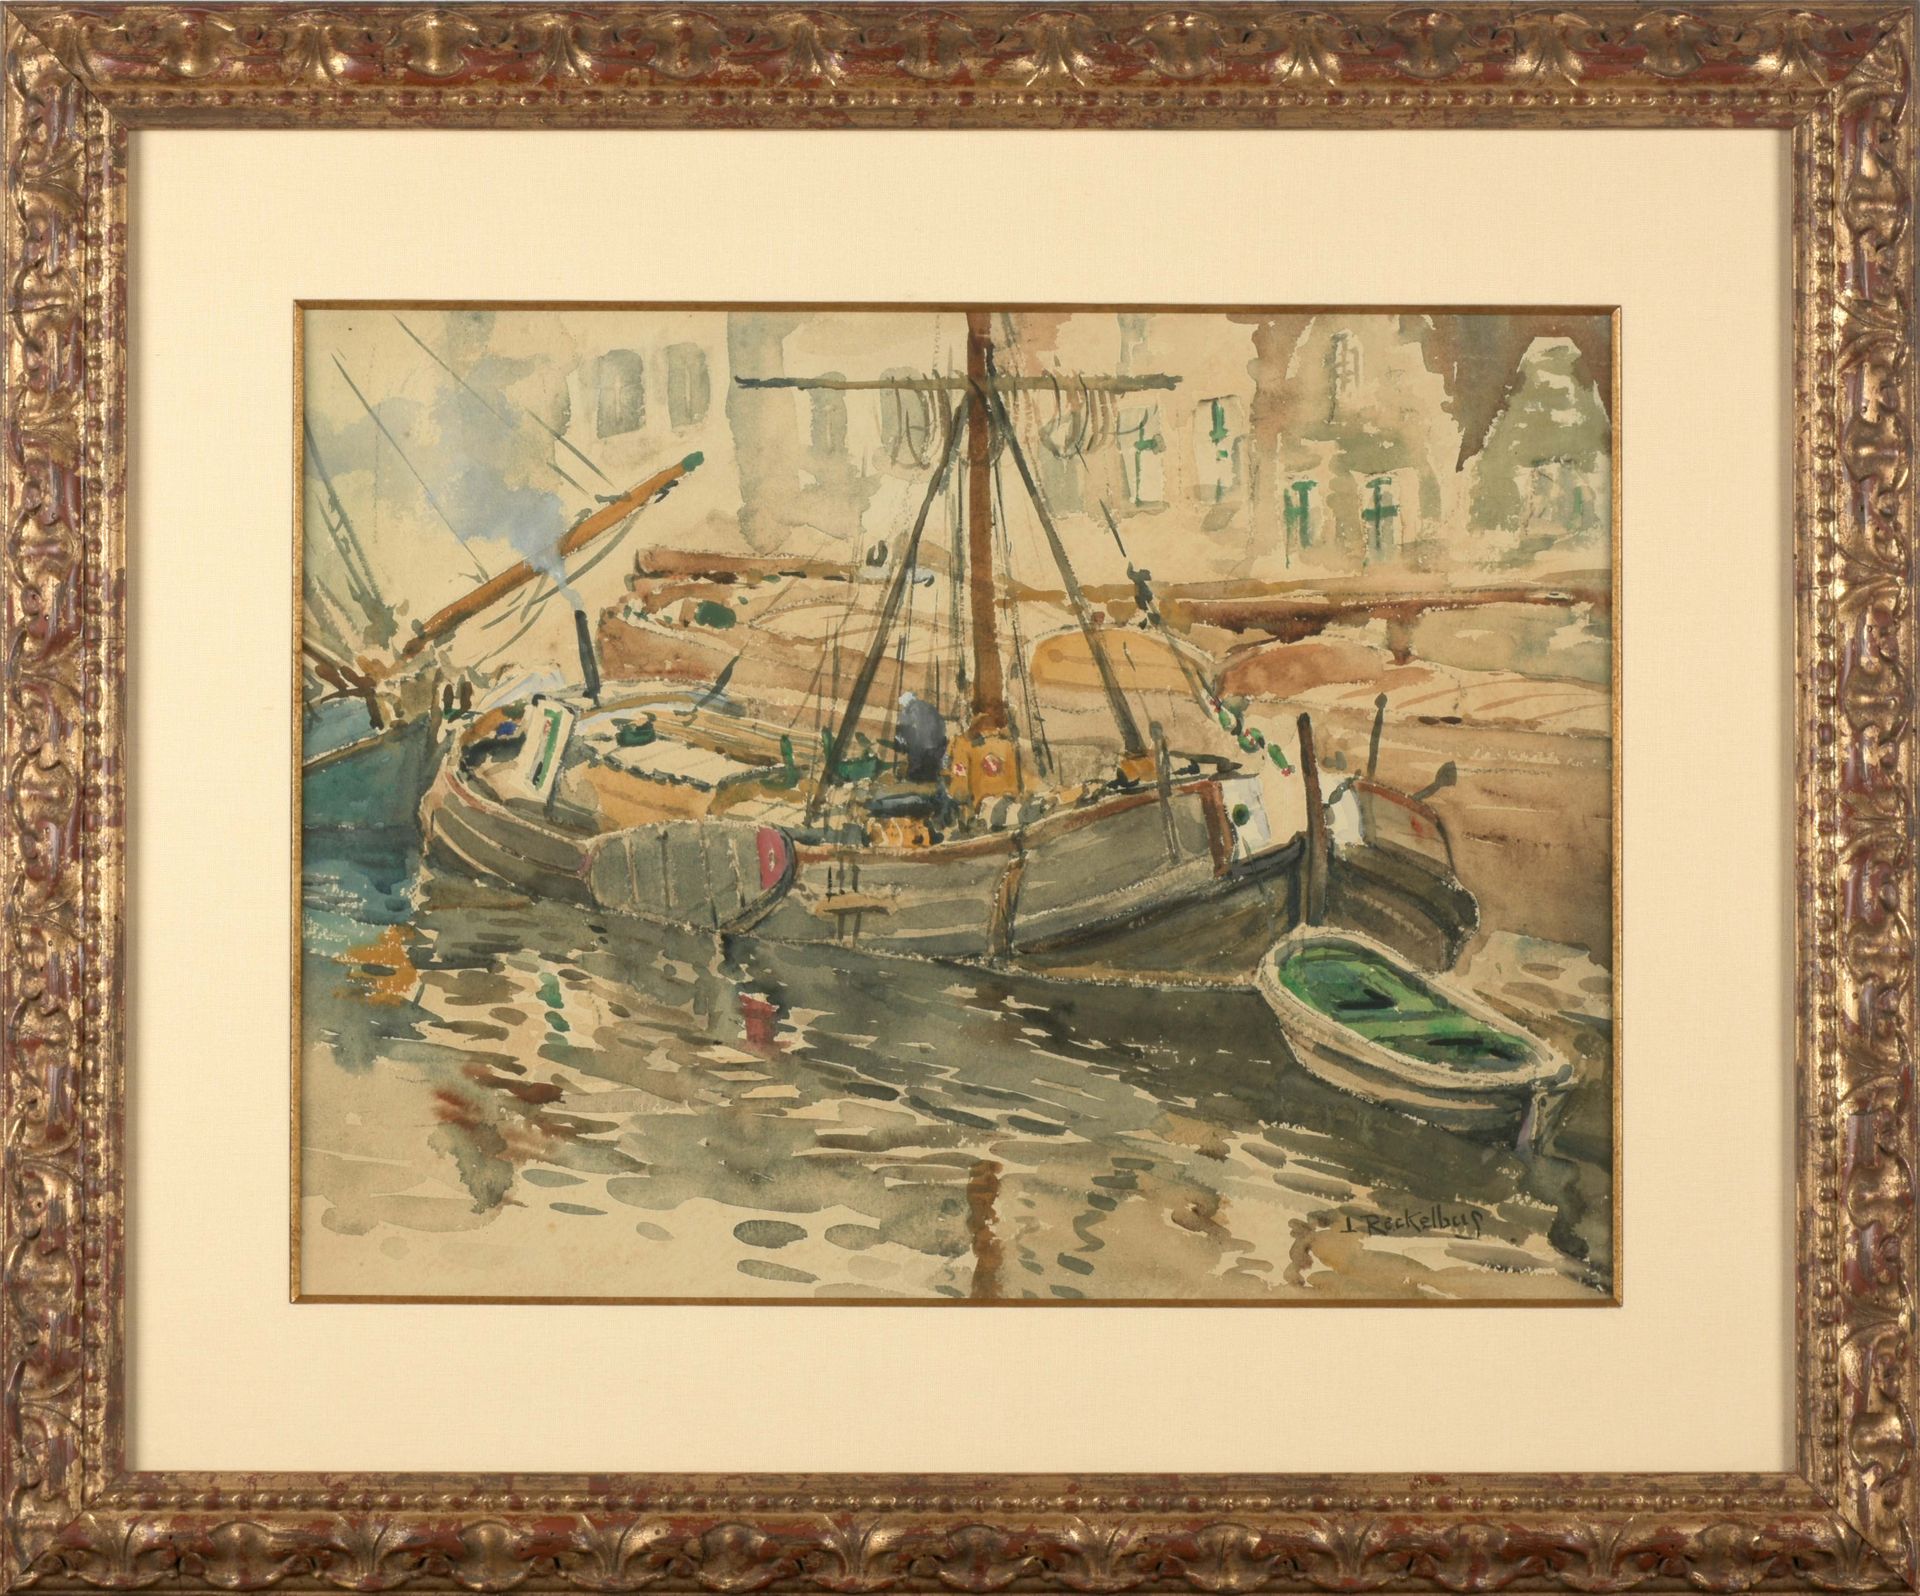 RECKELBUS, Louis (1864-1958) 布鲁日的运河上有船

水彩画(36 x 48 cm)，从左到右。采矿业